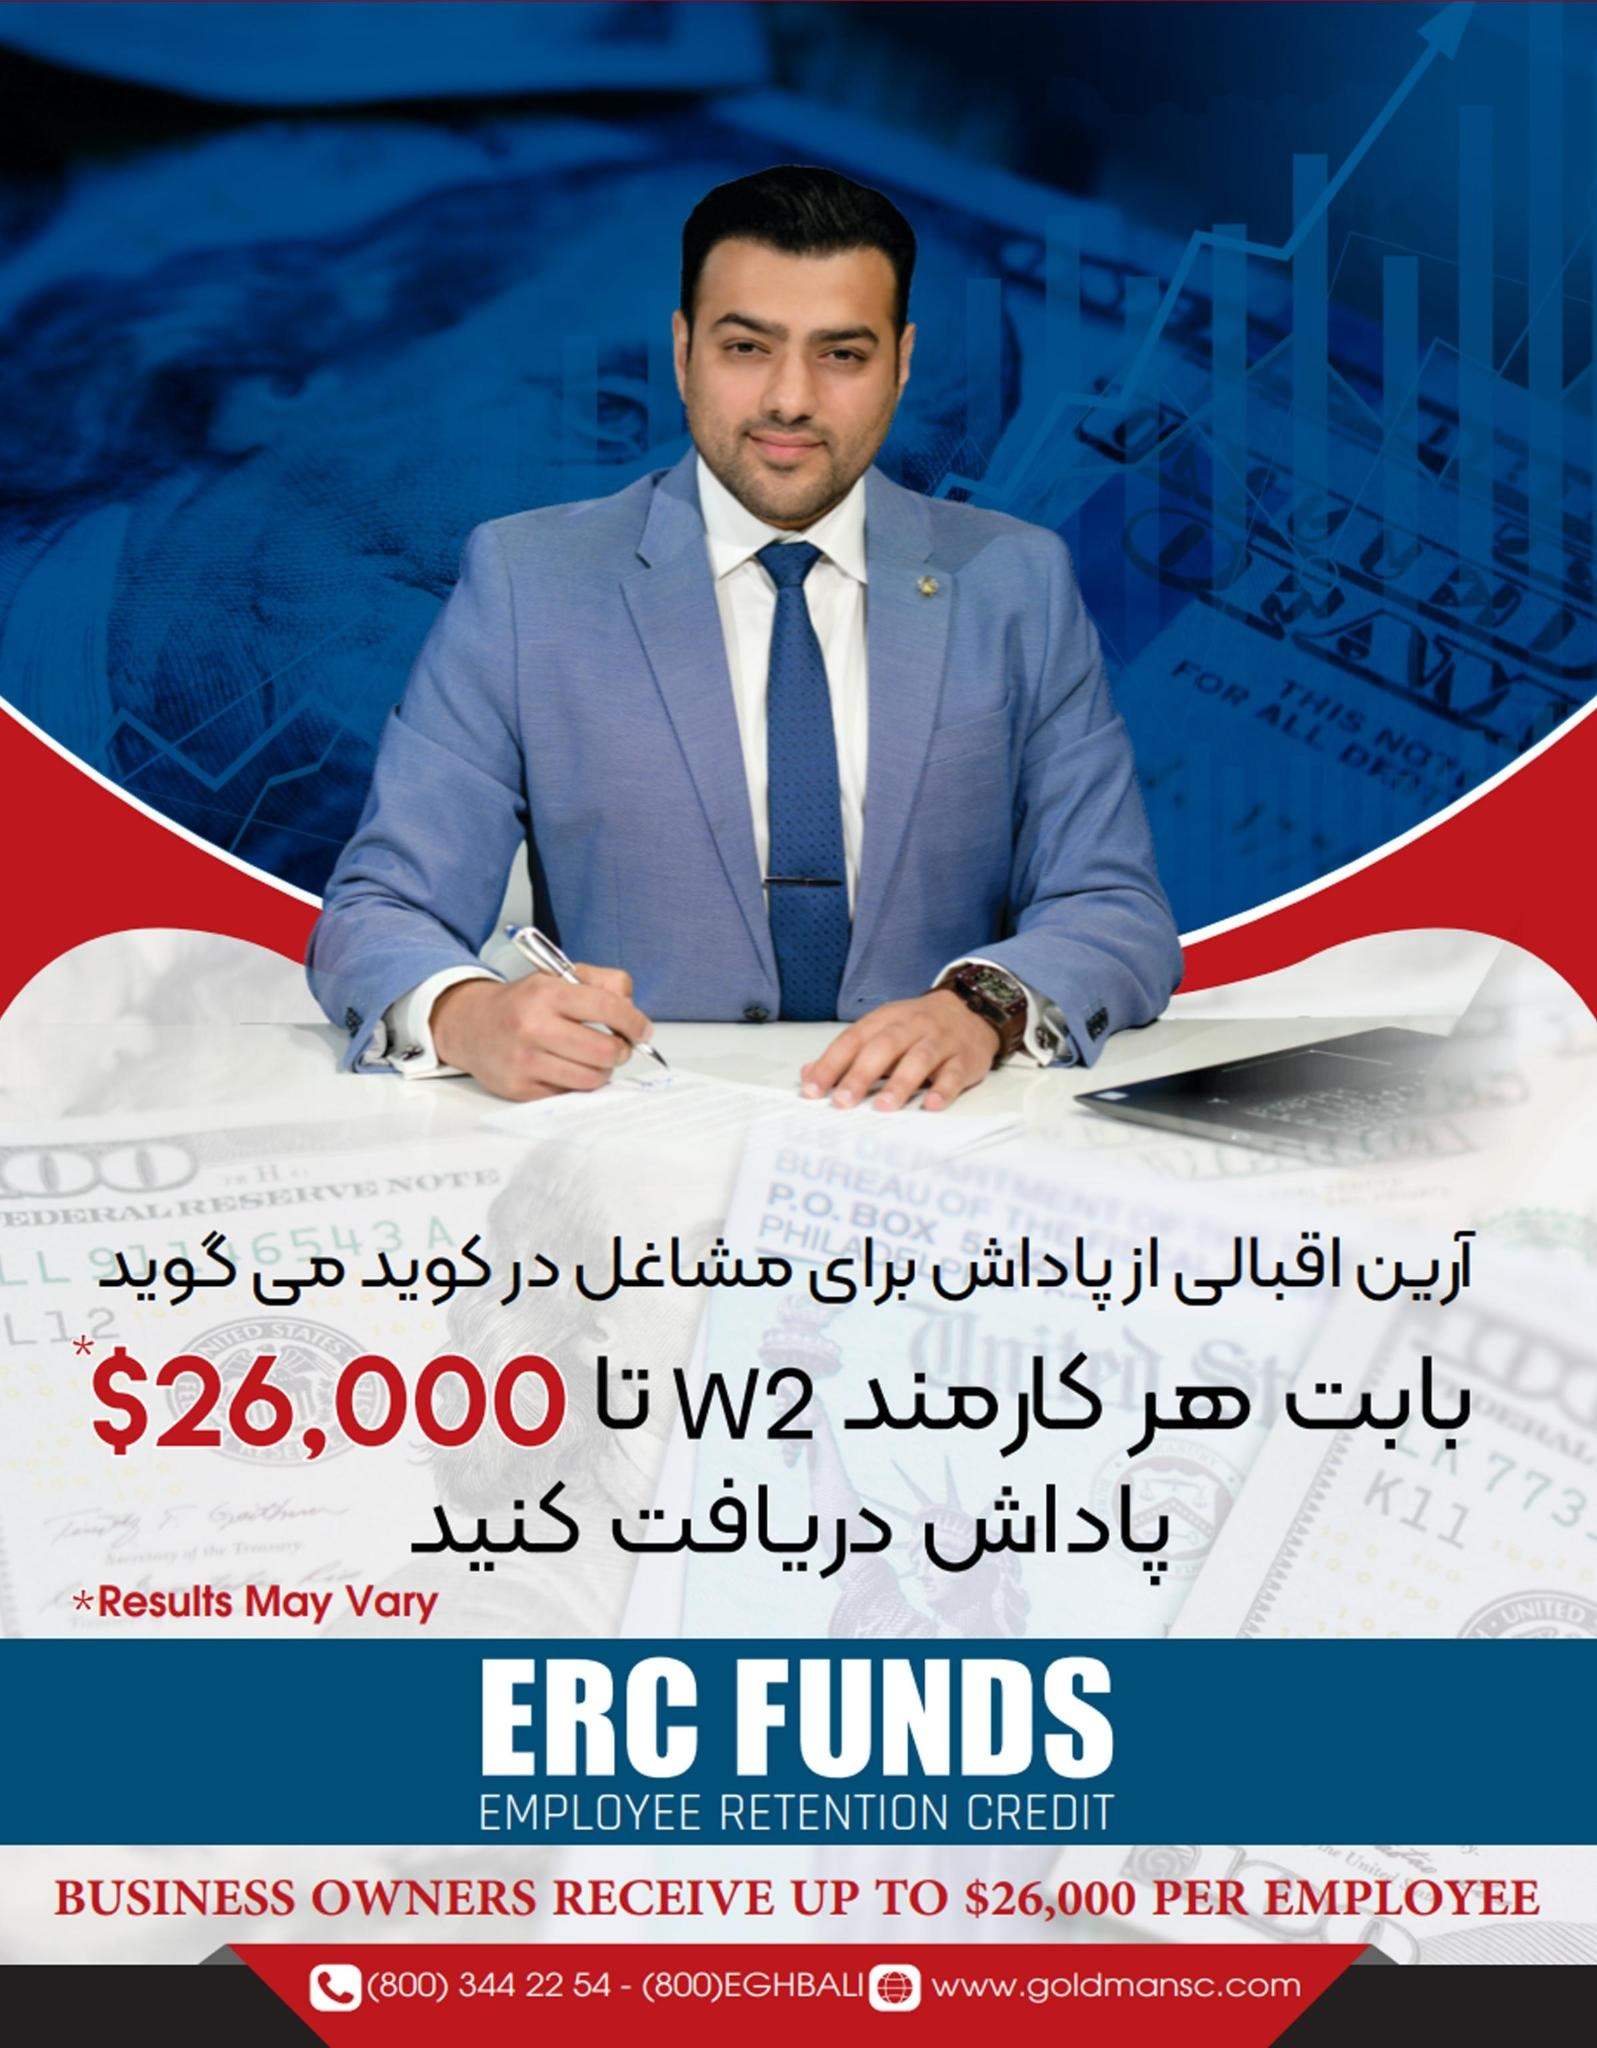 Enrich Financial Arian Eghbali